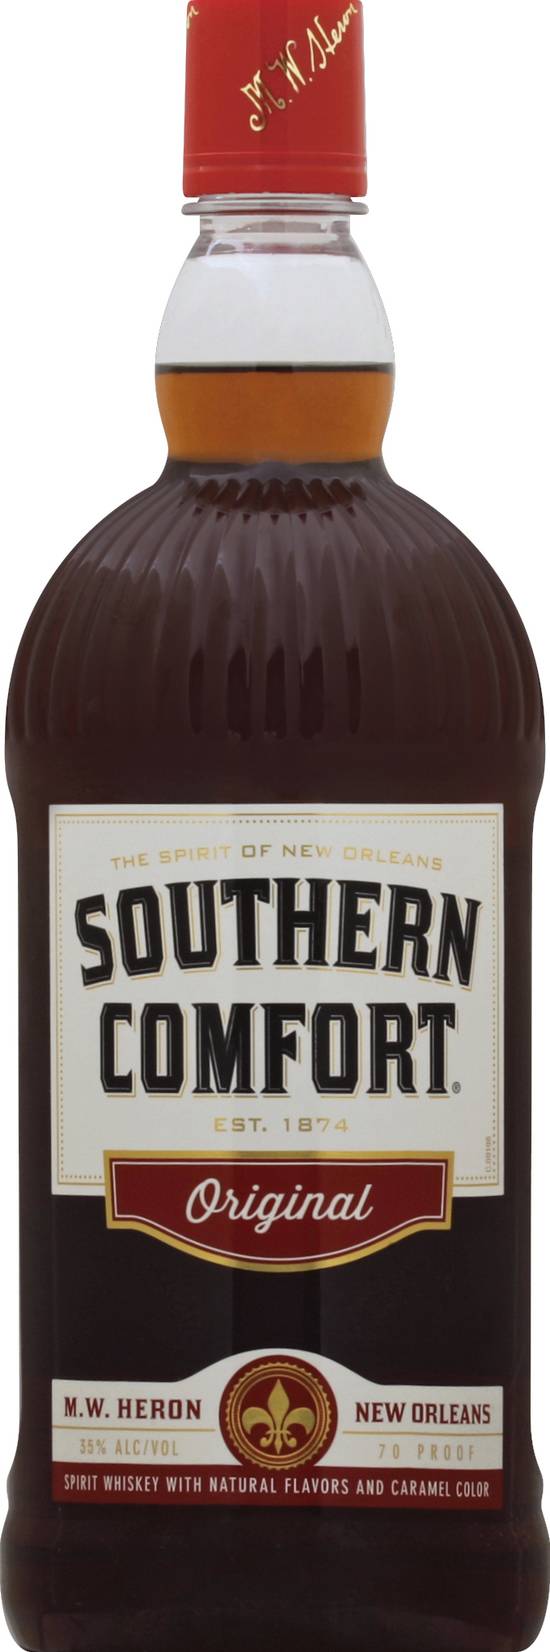 Southern Comfort Original Whiskey (1.75 L)